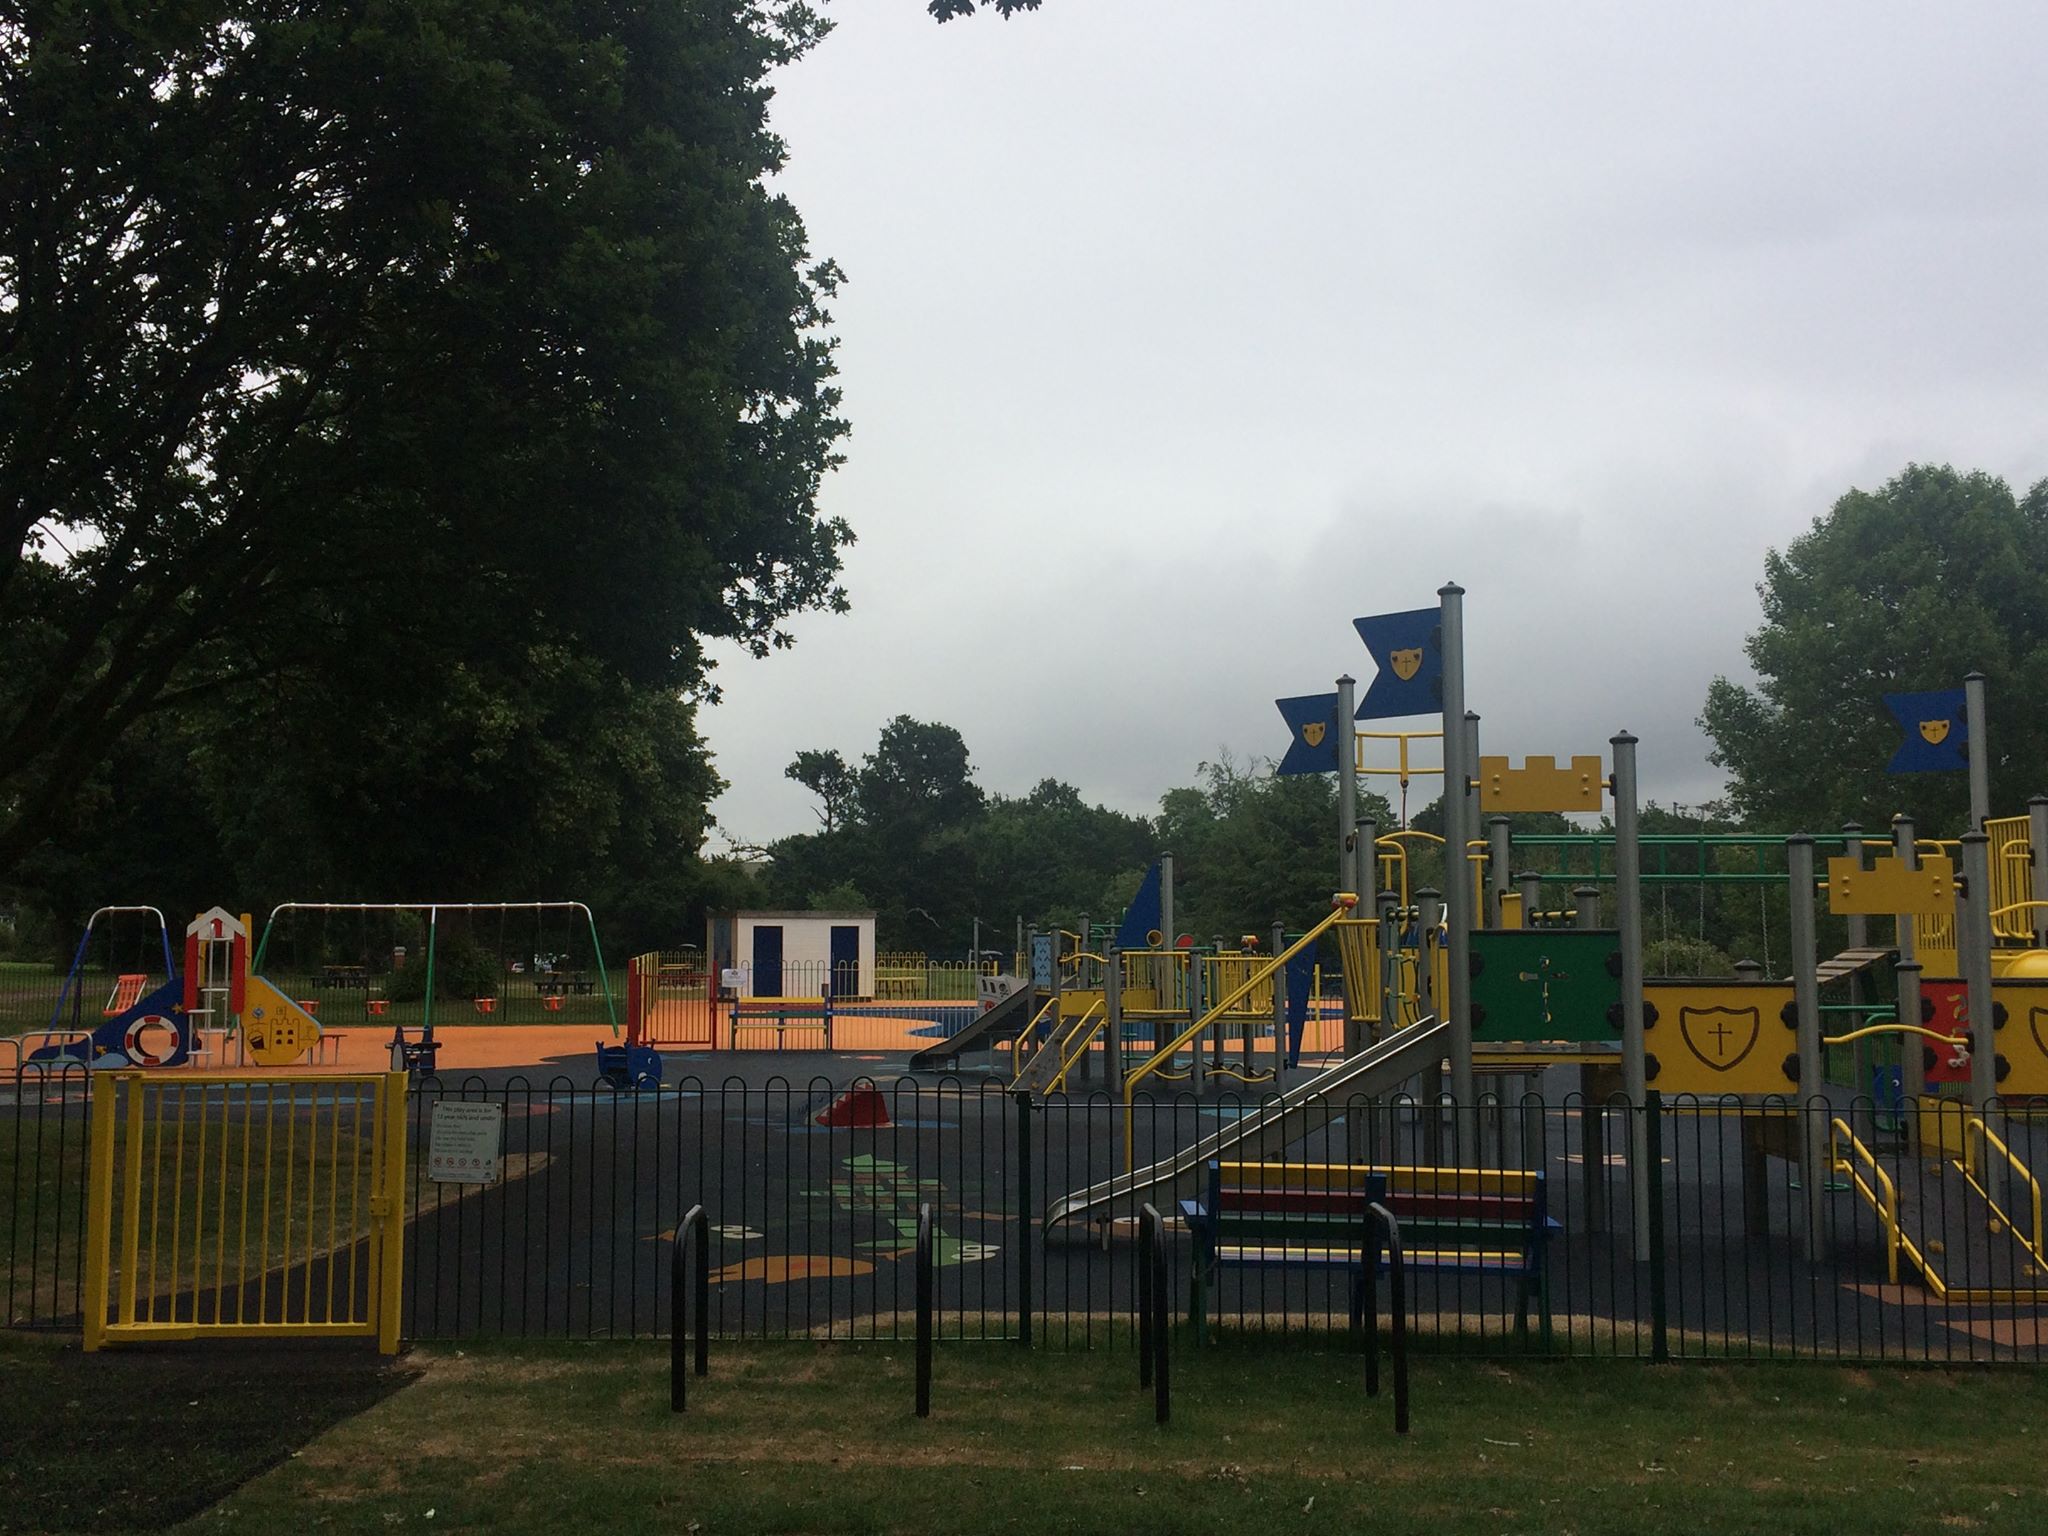 Bourne Park | Where To Take Our Children